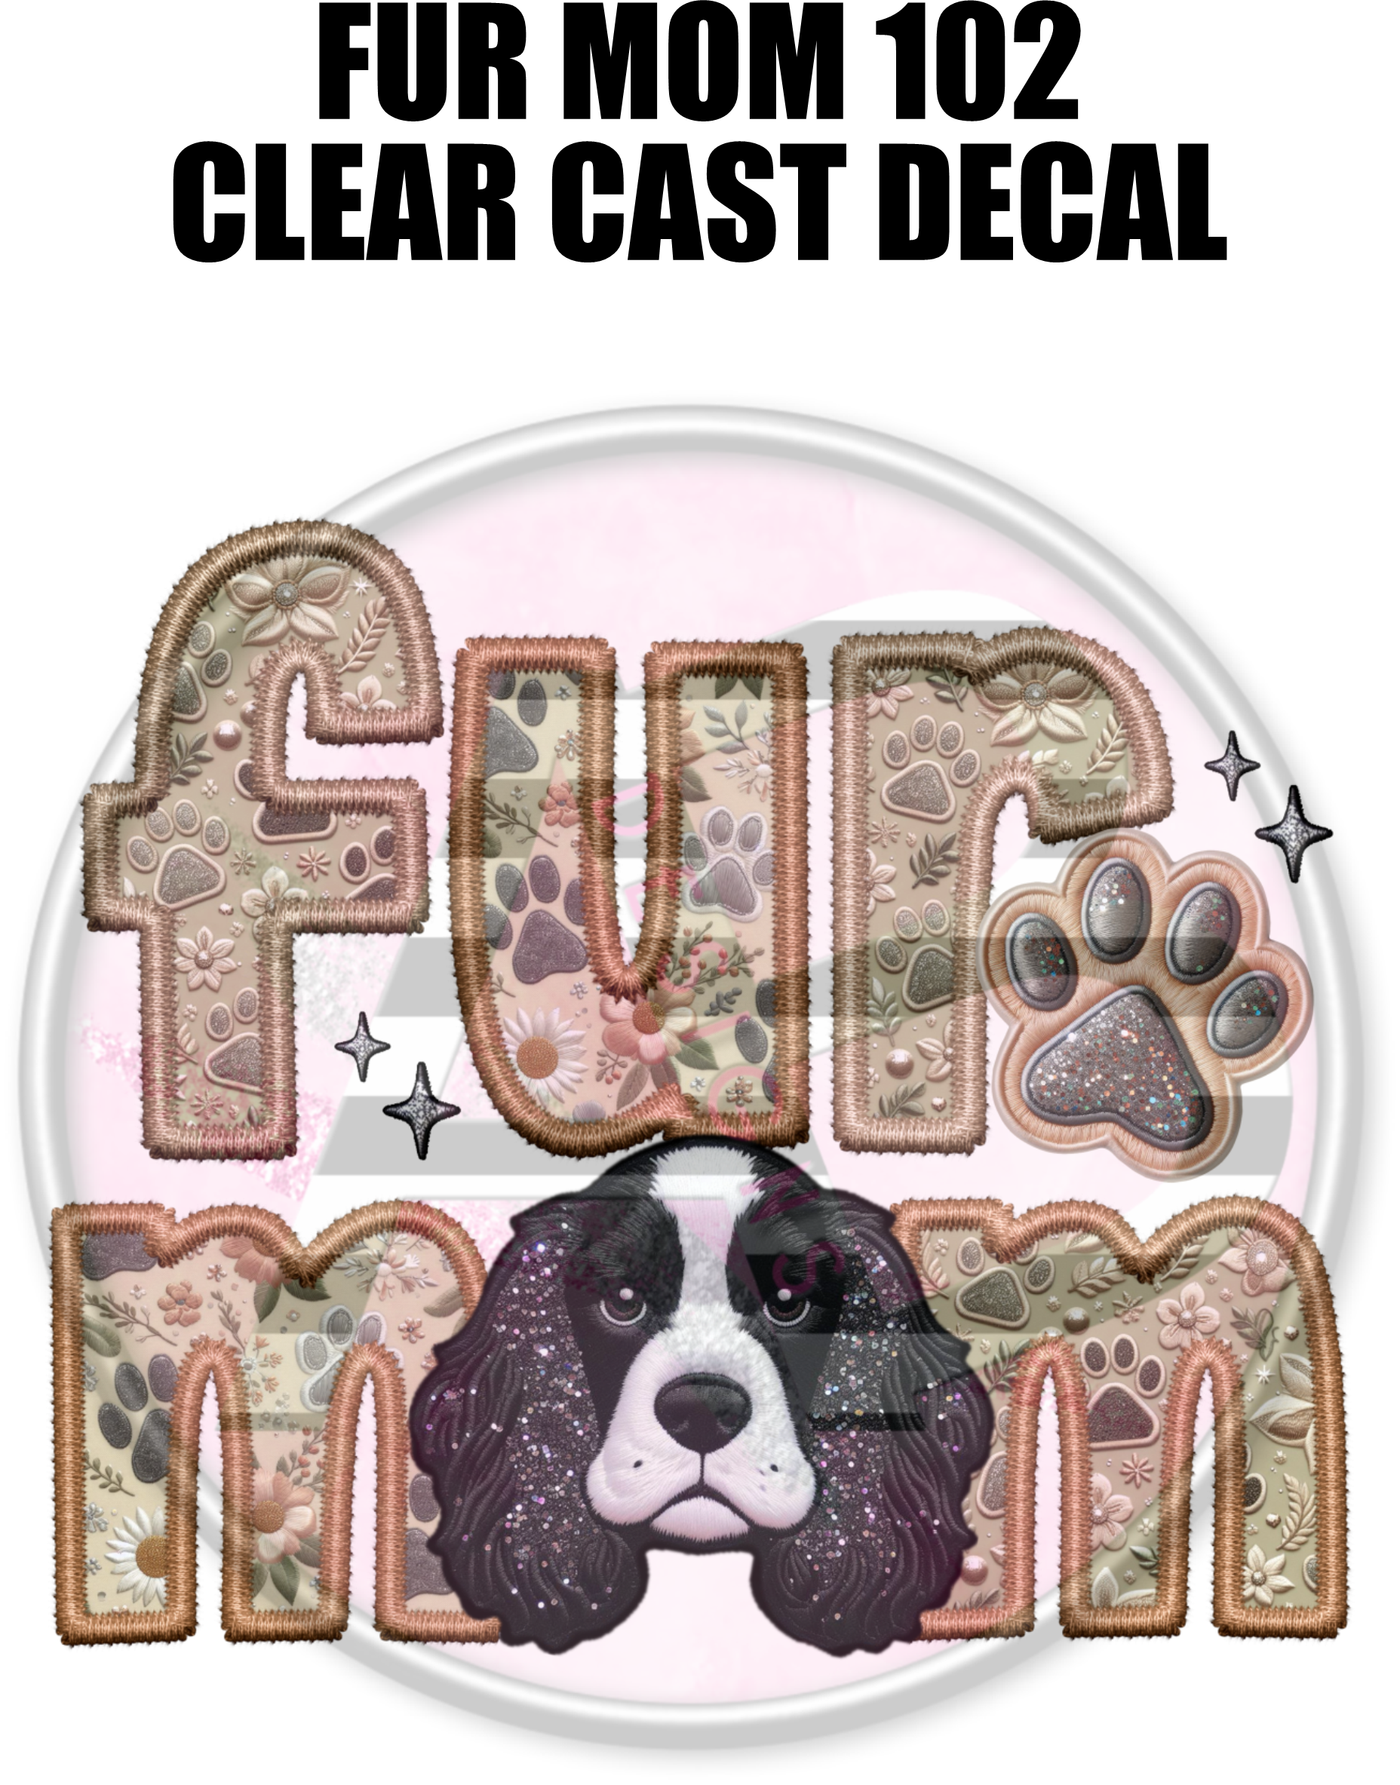 Fur Mom 102 - Clear Cast Decal